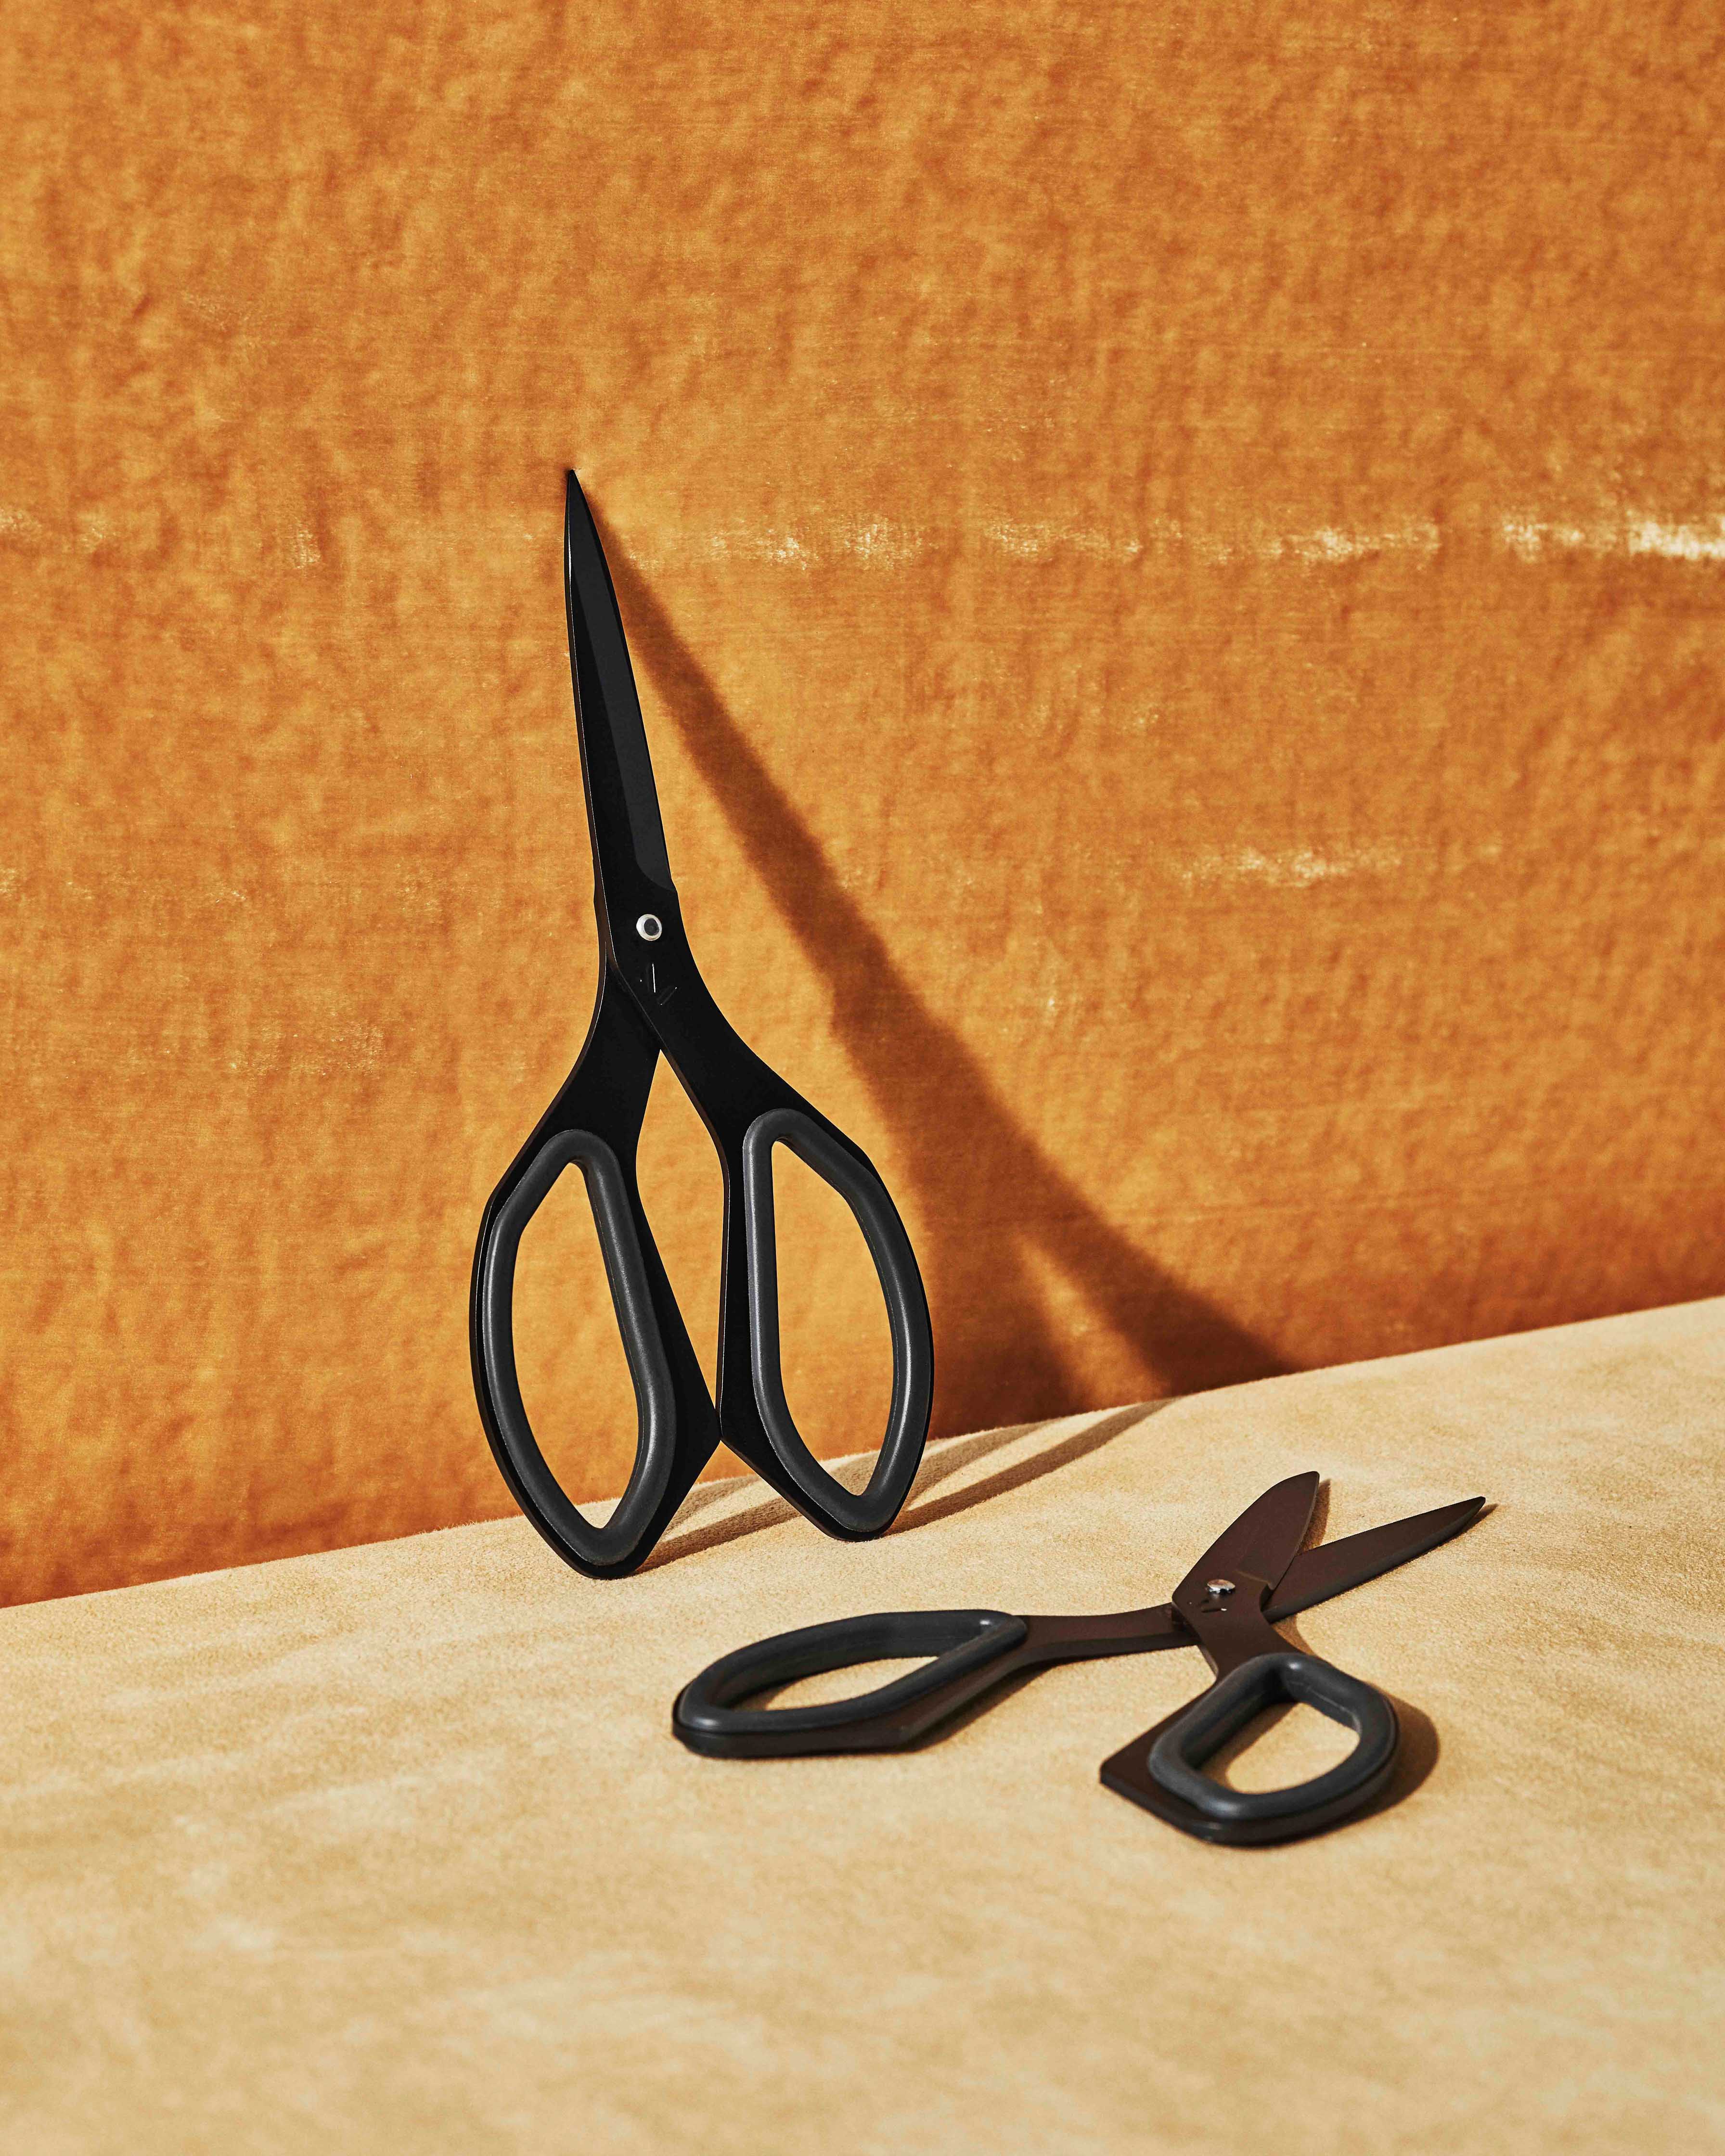 Cutworks Durasharp All Purpose Scissors 150220-1003 – Good's Store